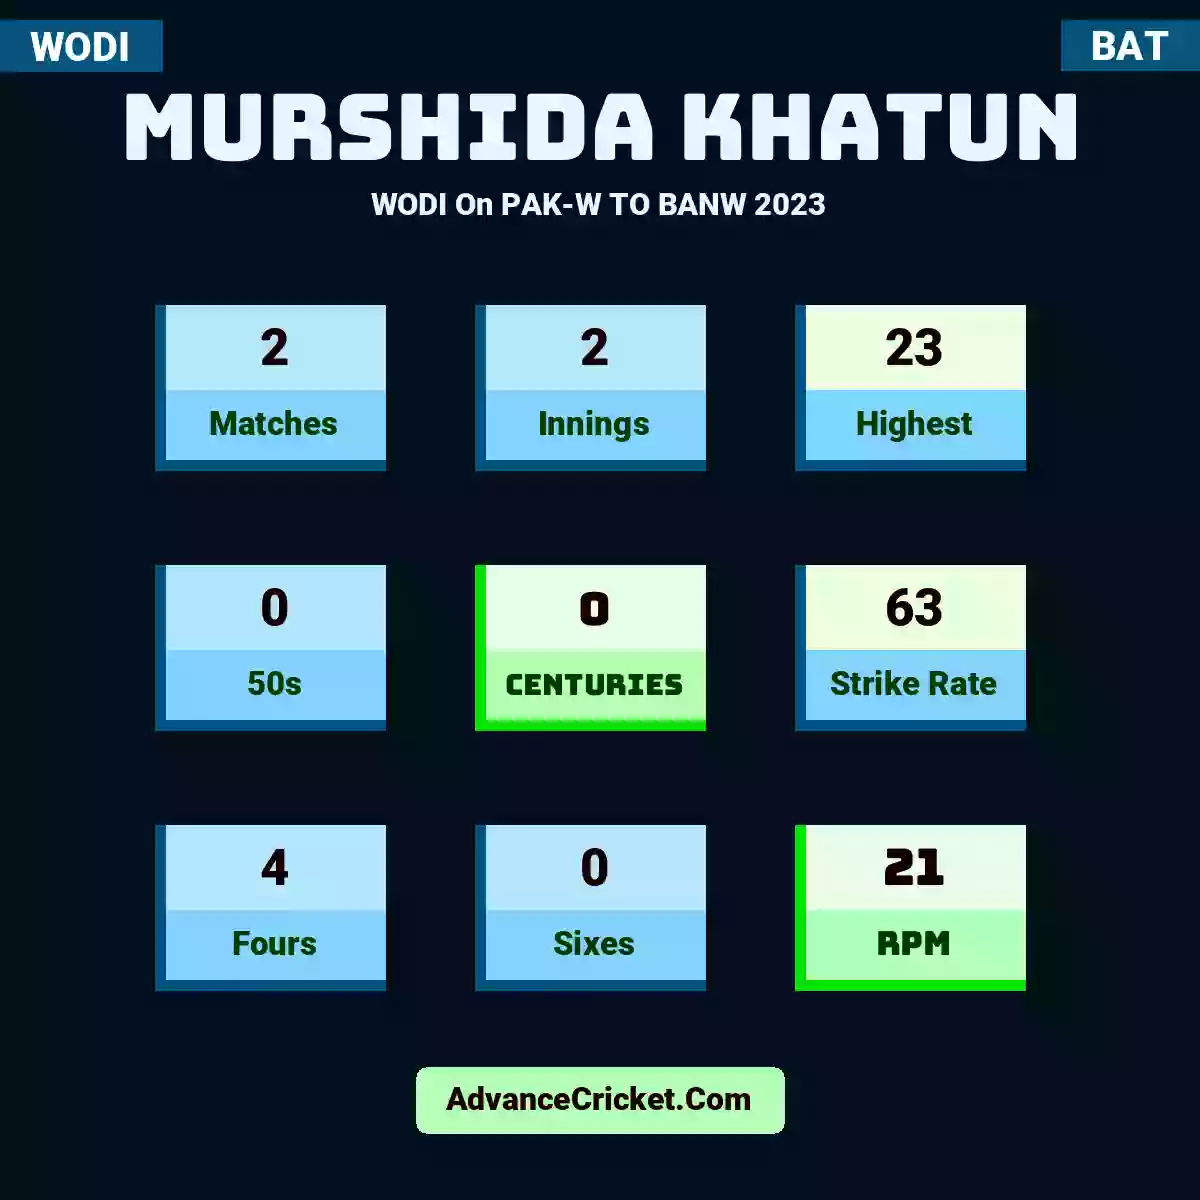 Murshida Khatun WODI  On PAK-W TO BANW 2023, Murshida Khatun played 2 matches, scored 23 runs as highest, 0 half-centuries, and 0 centuries, with a strike rate of 63. M.Khatun hit 4 fours and 0 sixes, with an RPM of 21.